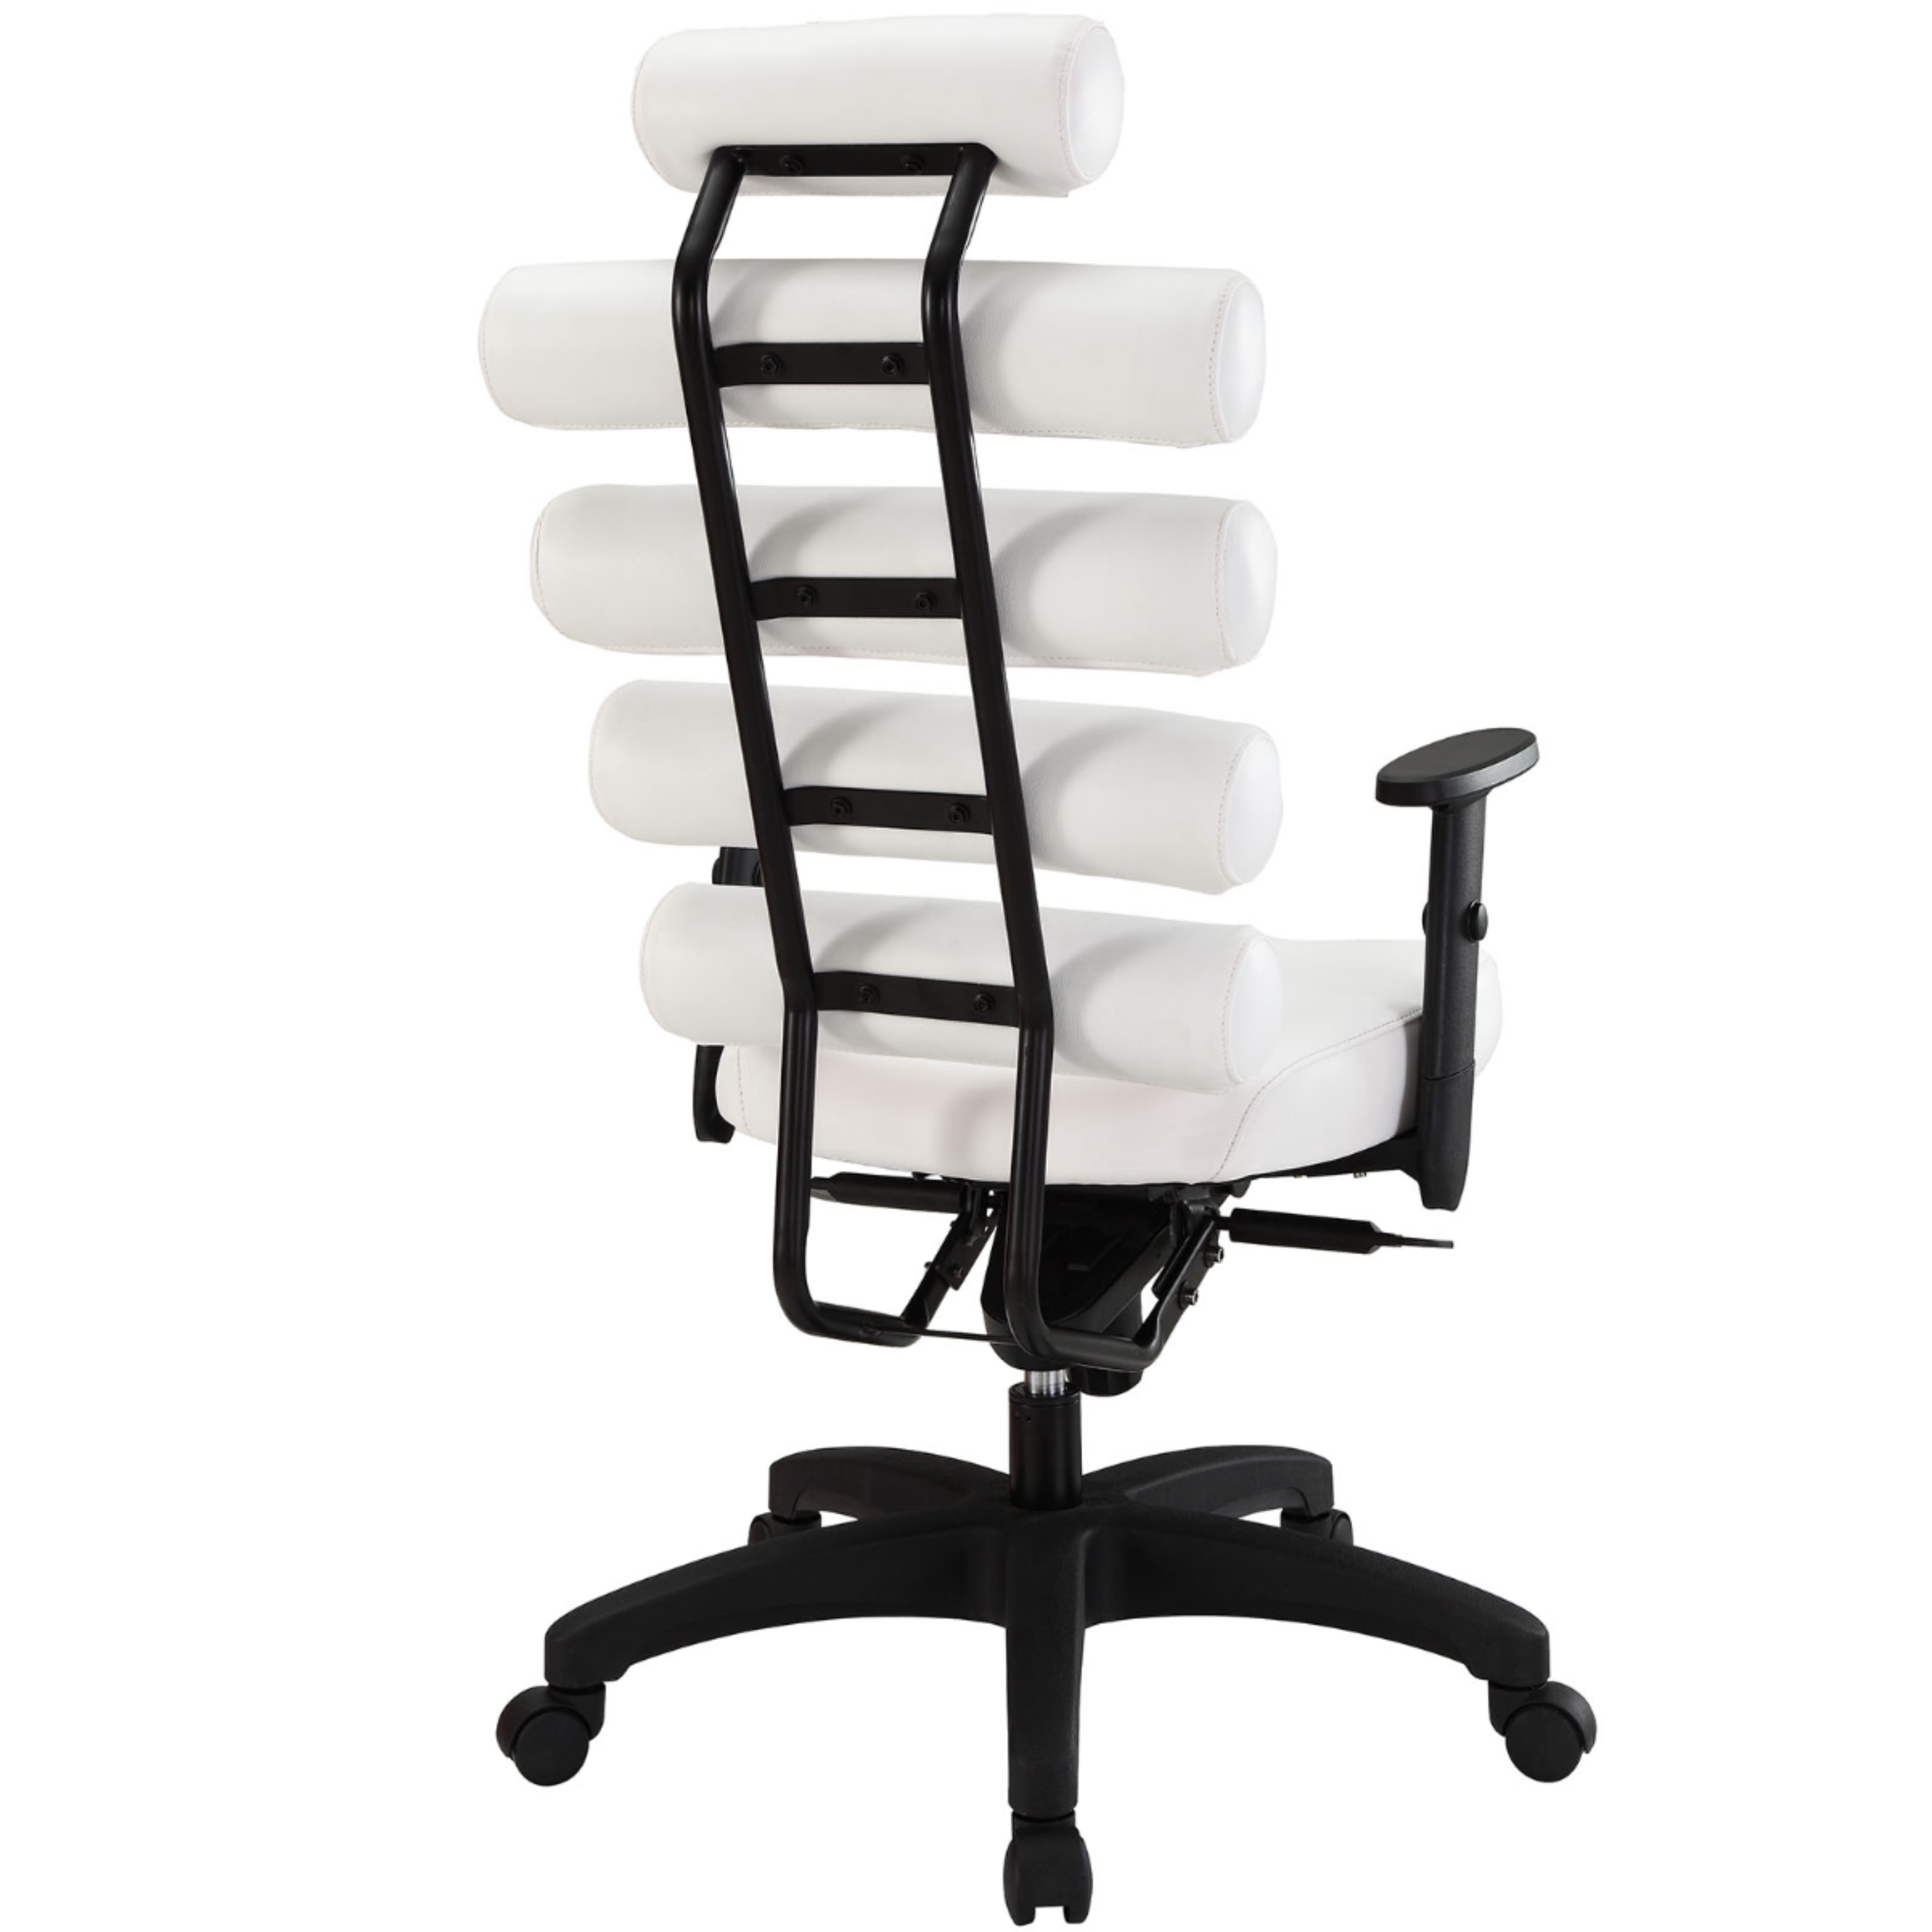 Moon Office Chair - High Back